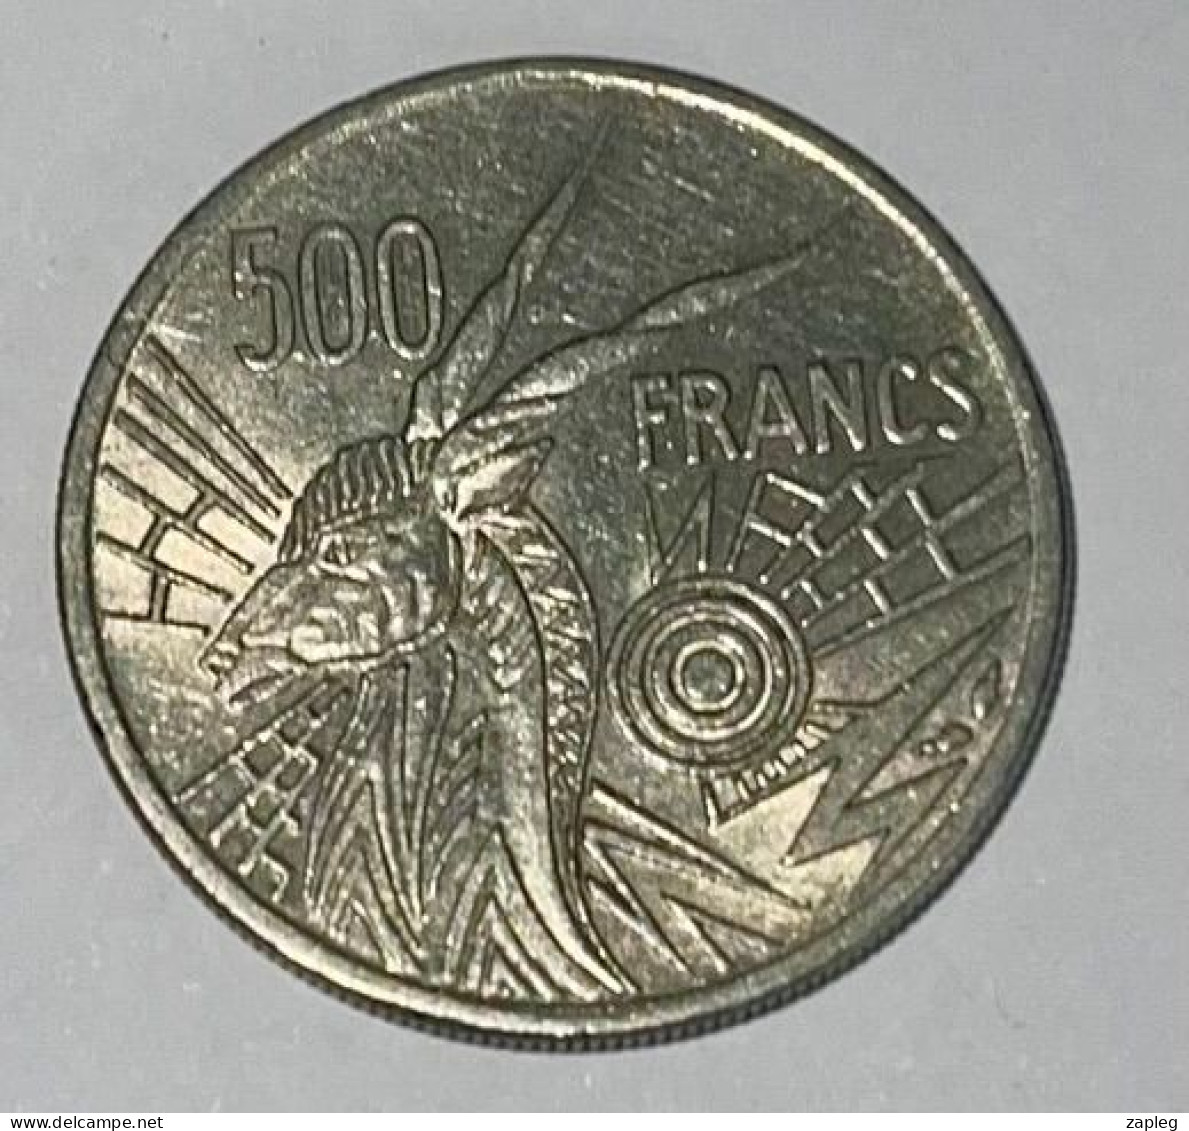 Afrique Centrale (BEAC) 500 Francs, 1976 - Cameroun - Kamerun